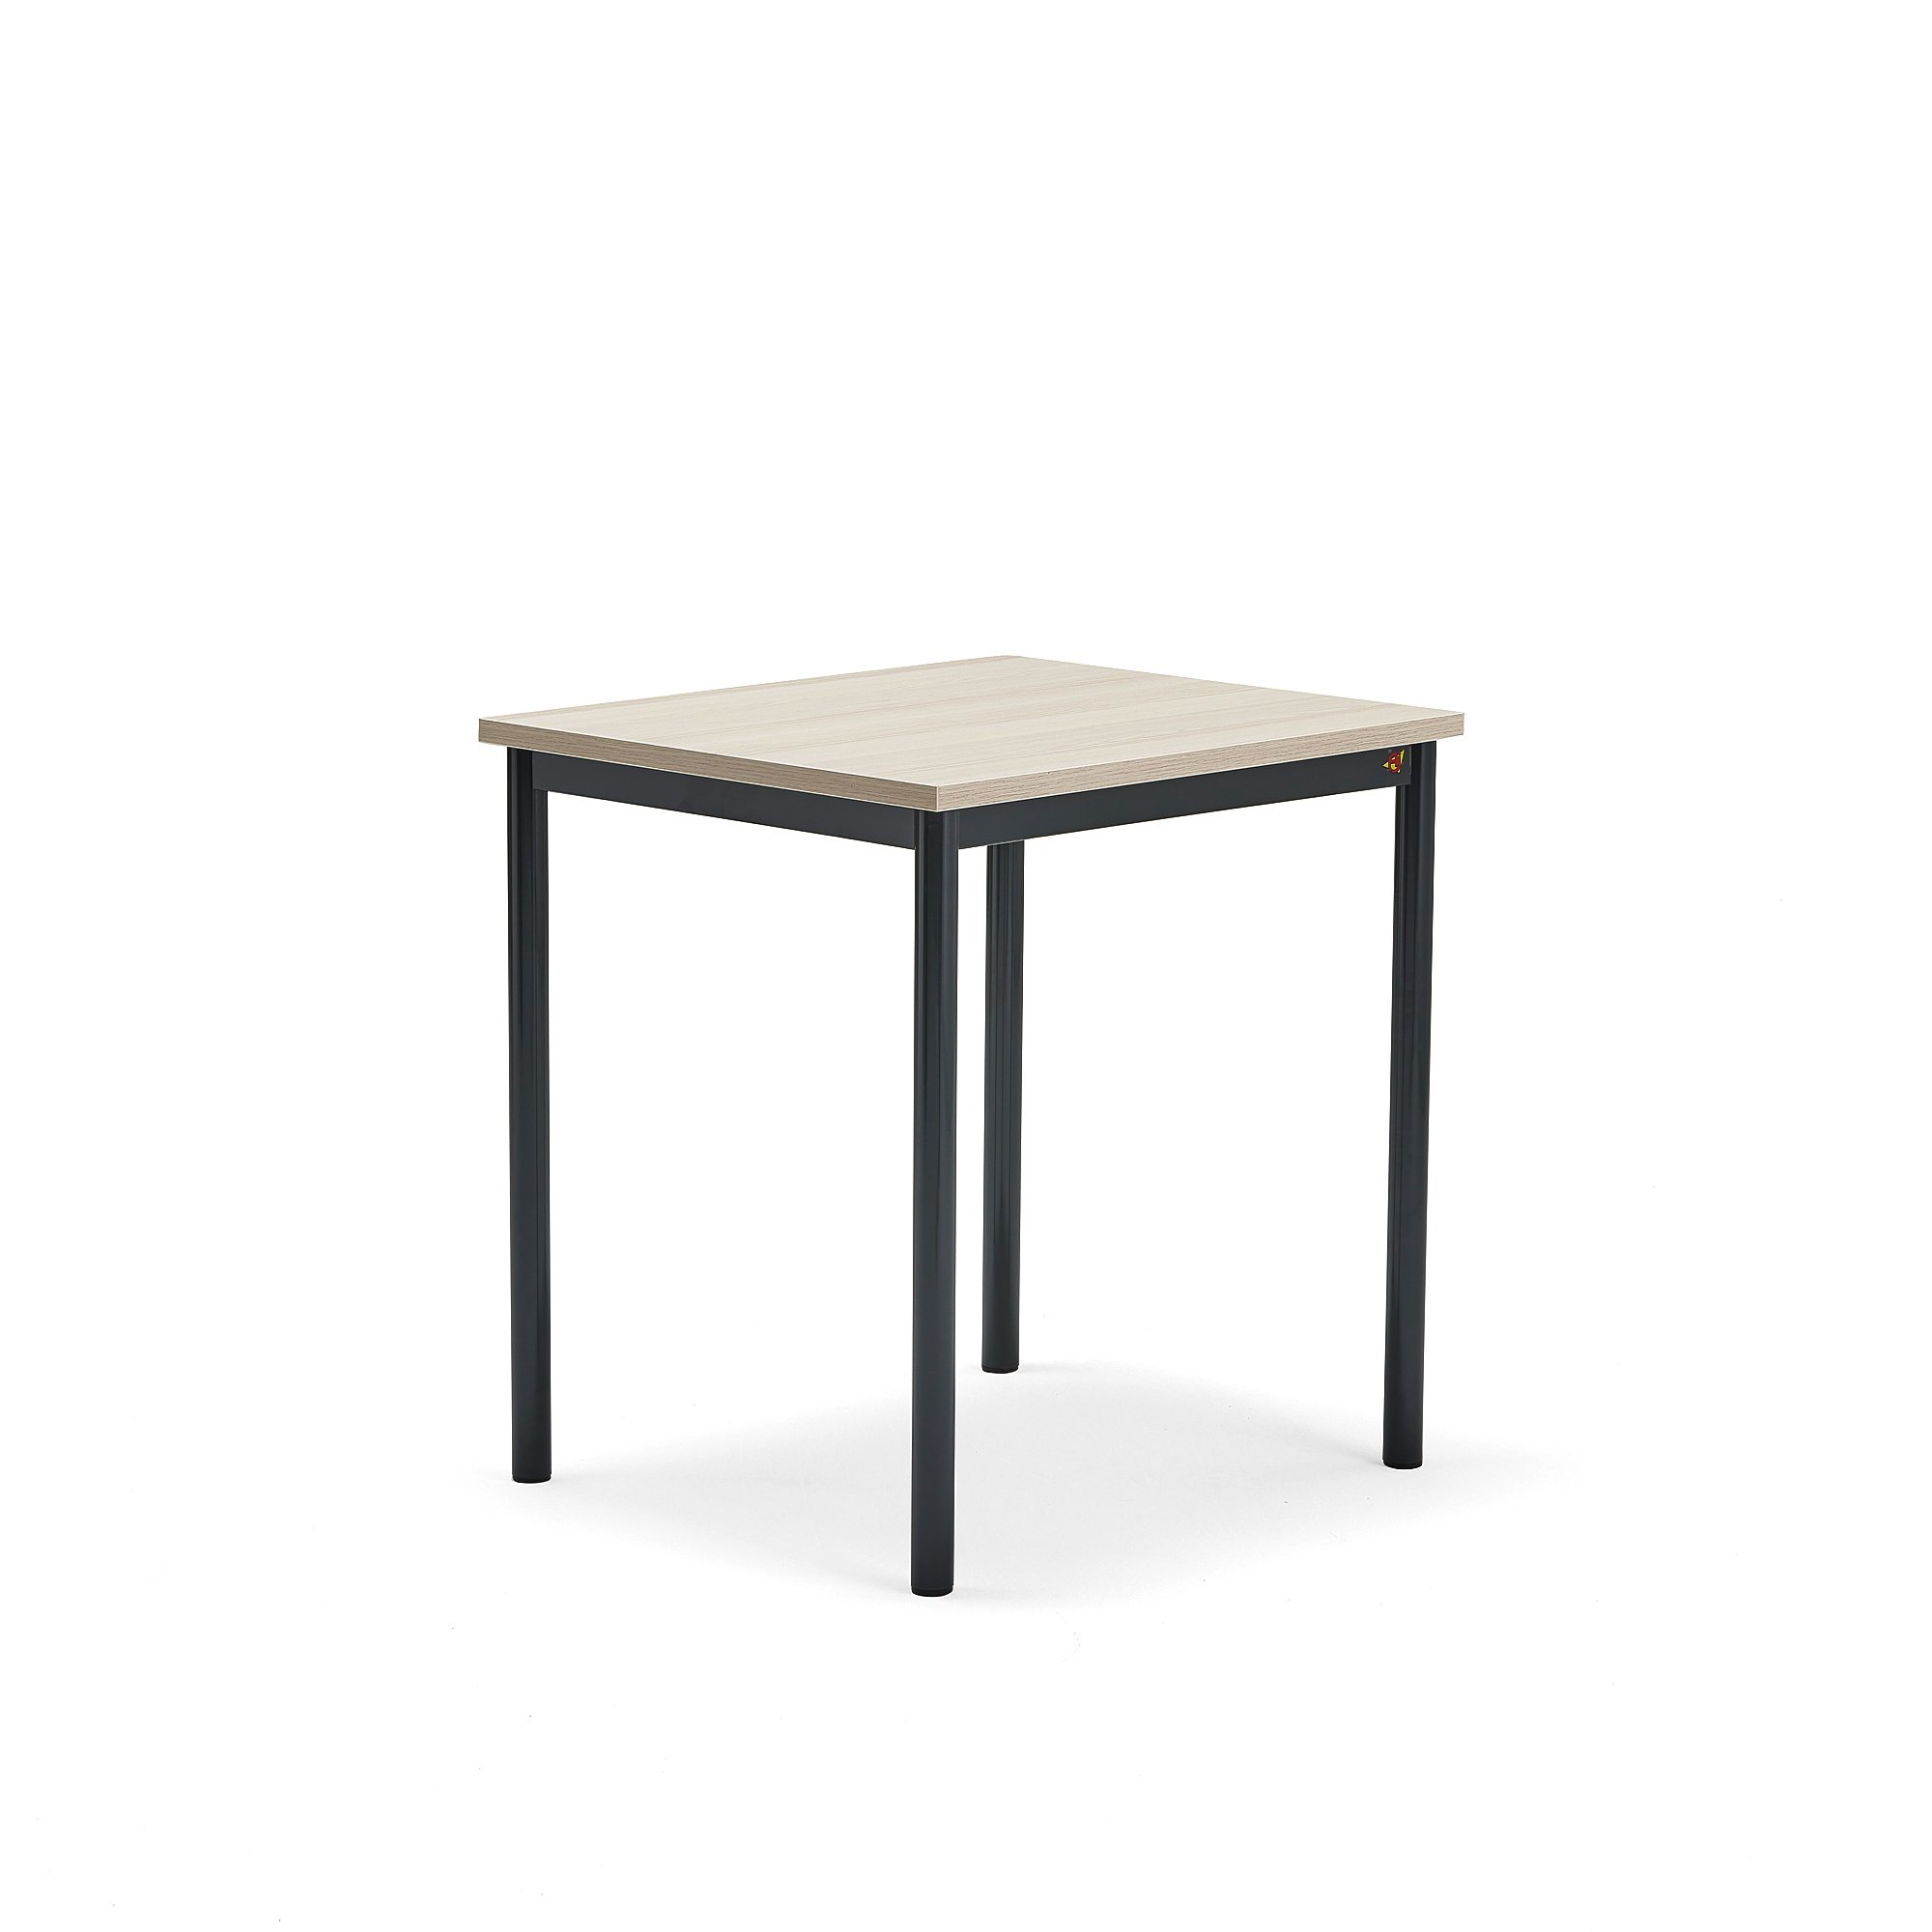 Stůl BORÅS PLUS, 700x600x720 mm, antracitově šedé nohy, HPL deska, jasan